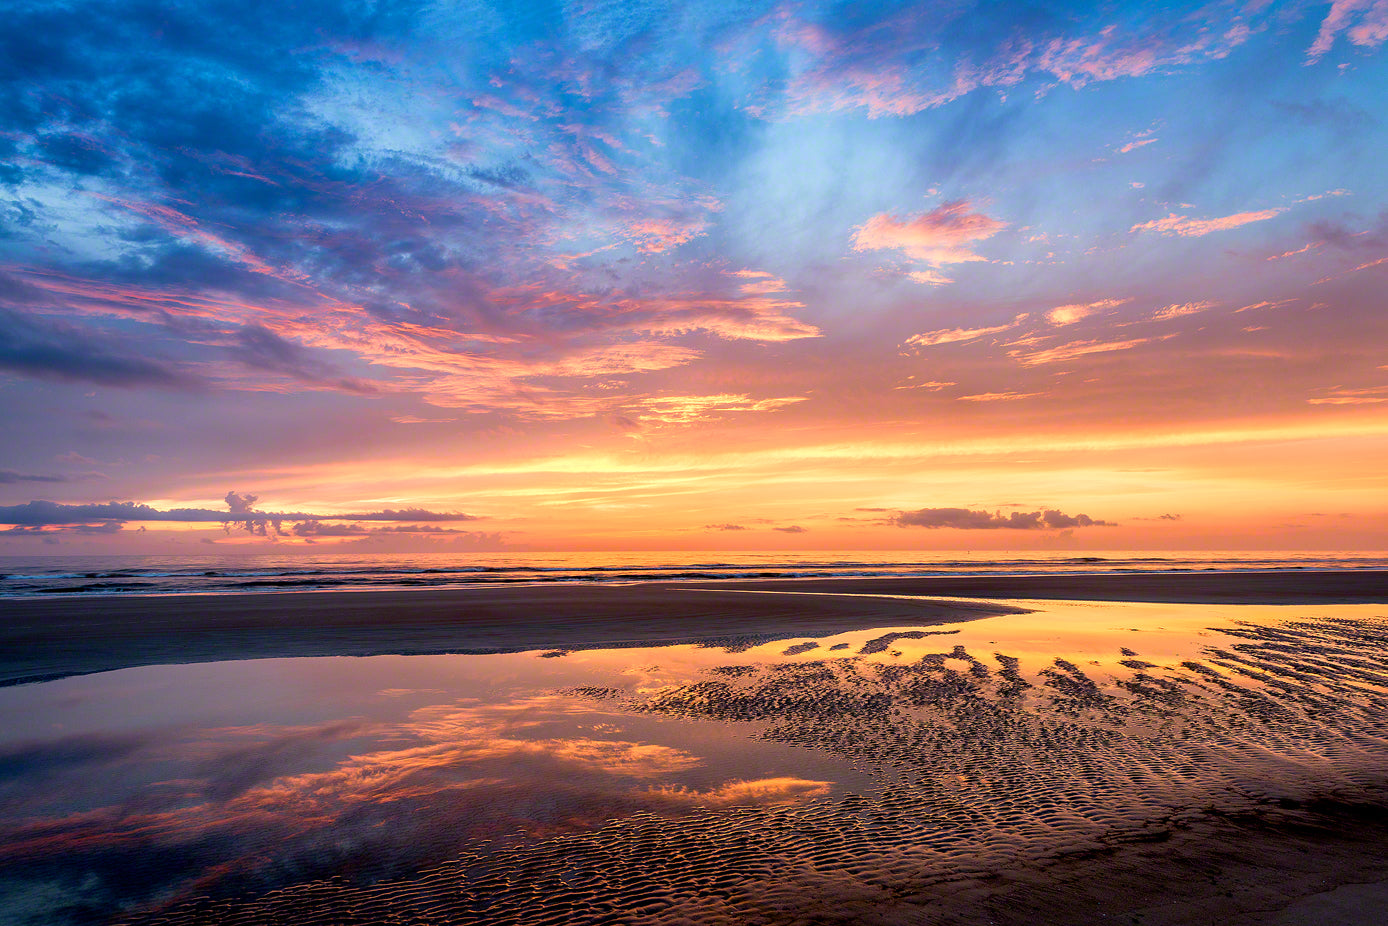 A photo of a beautiful sunrise on the beach in New Smyrna Beach